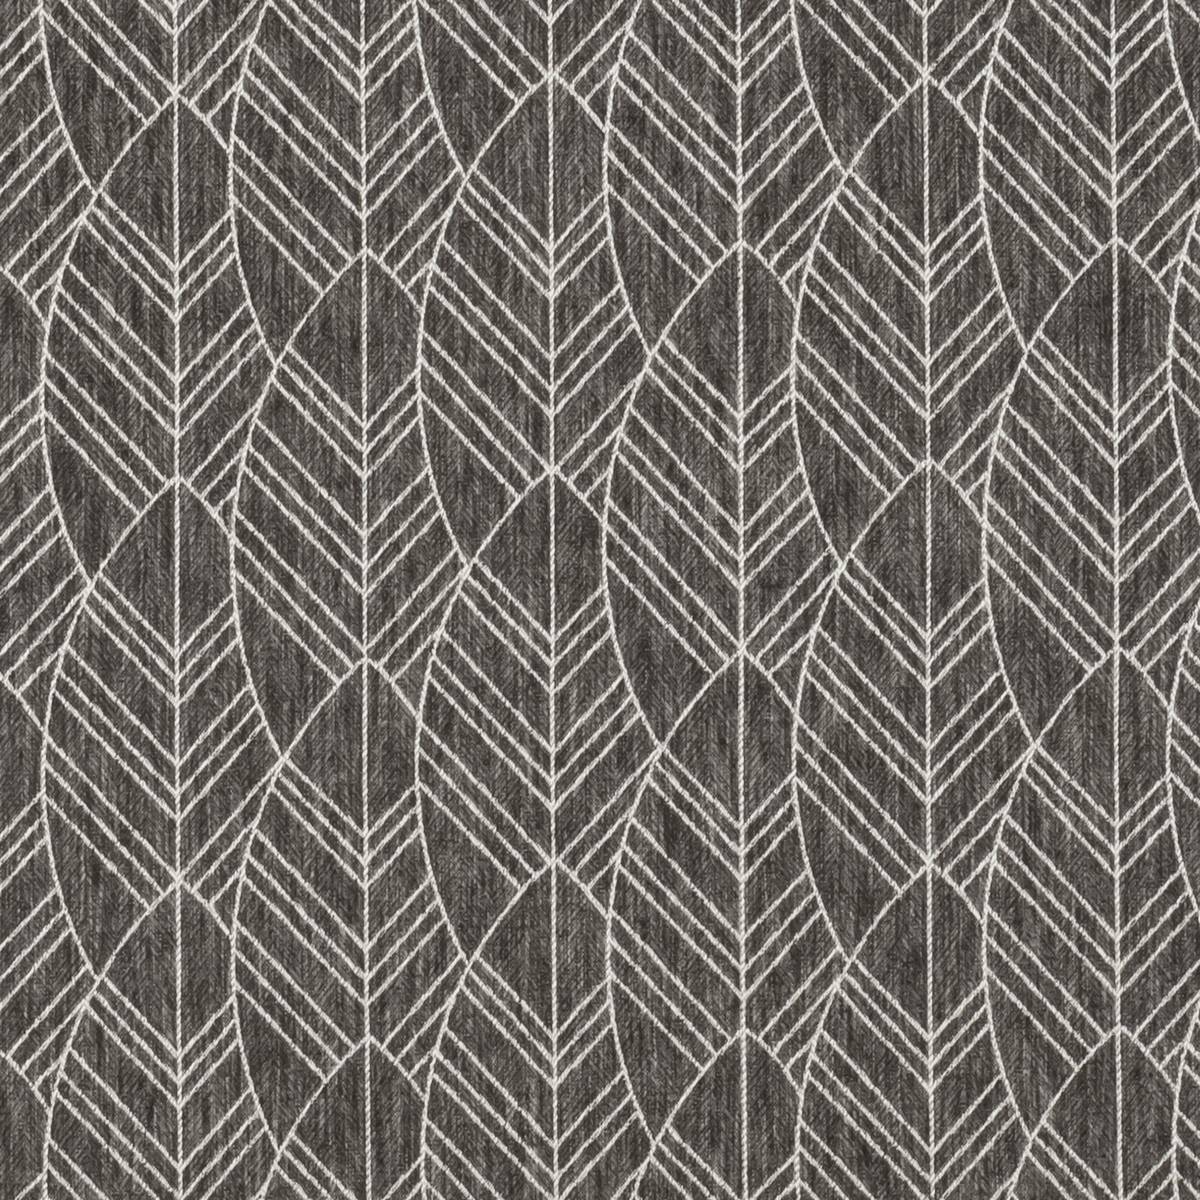 Atika Charcoal Fabric by Studio G